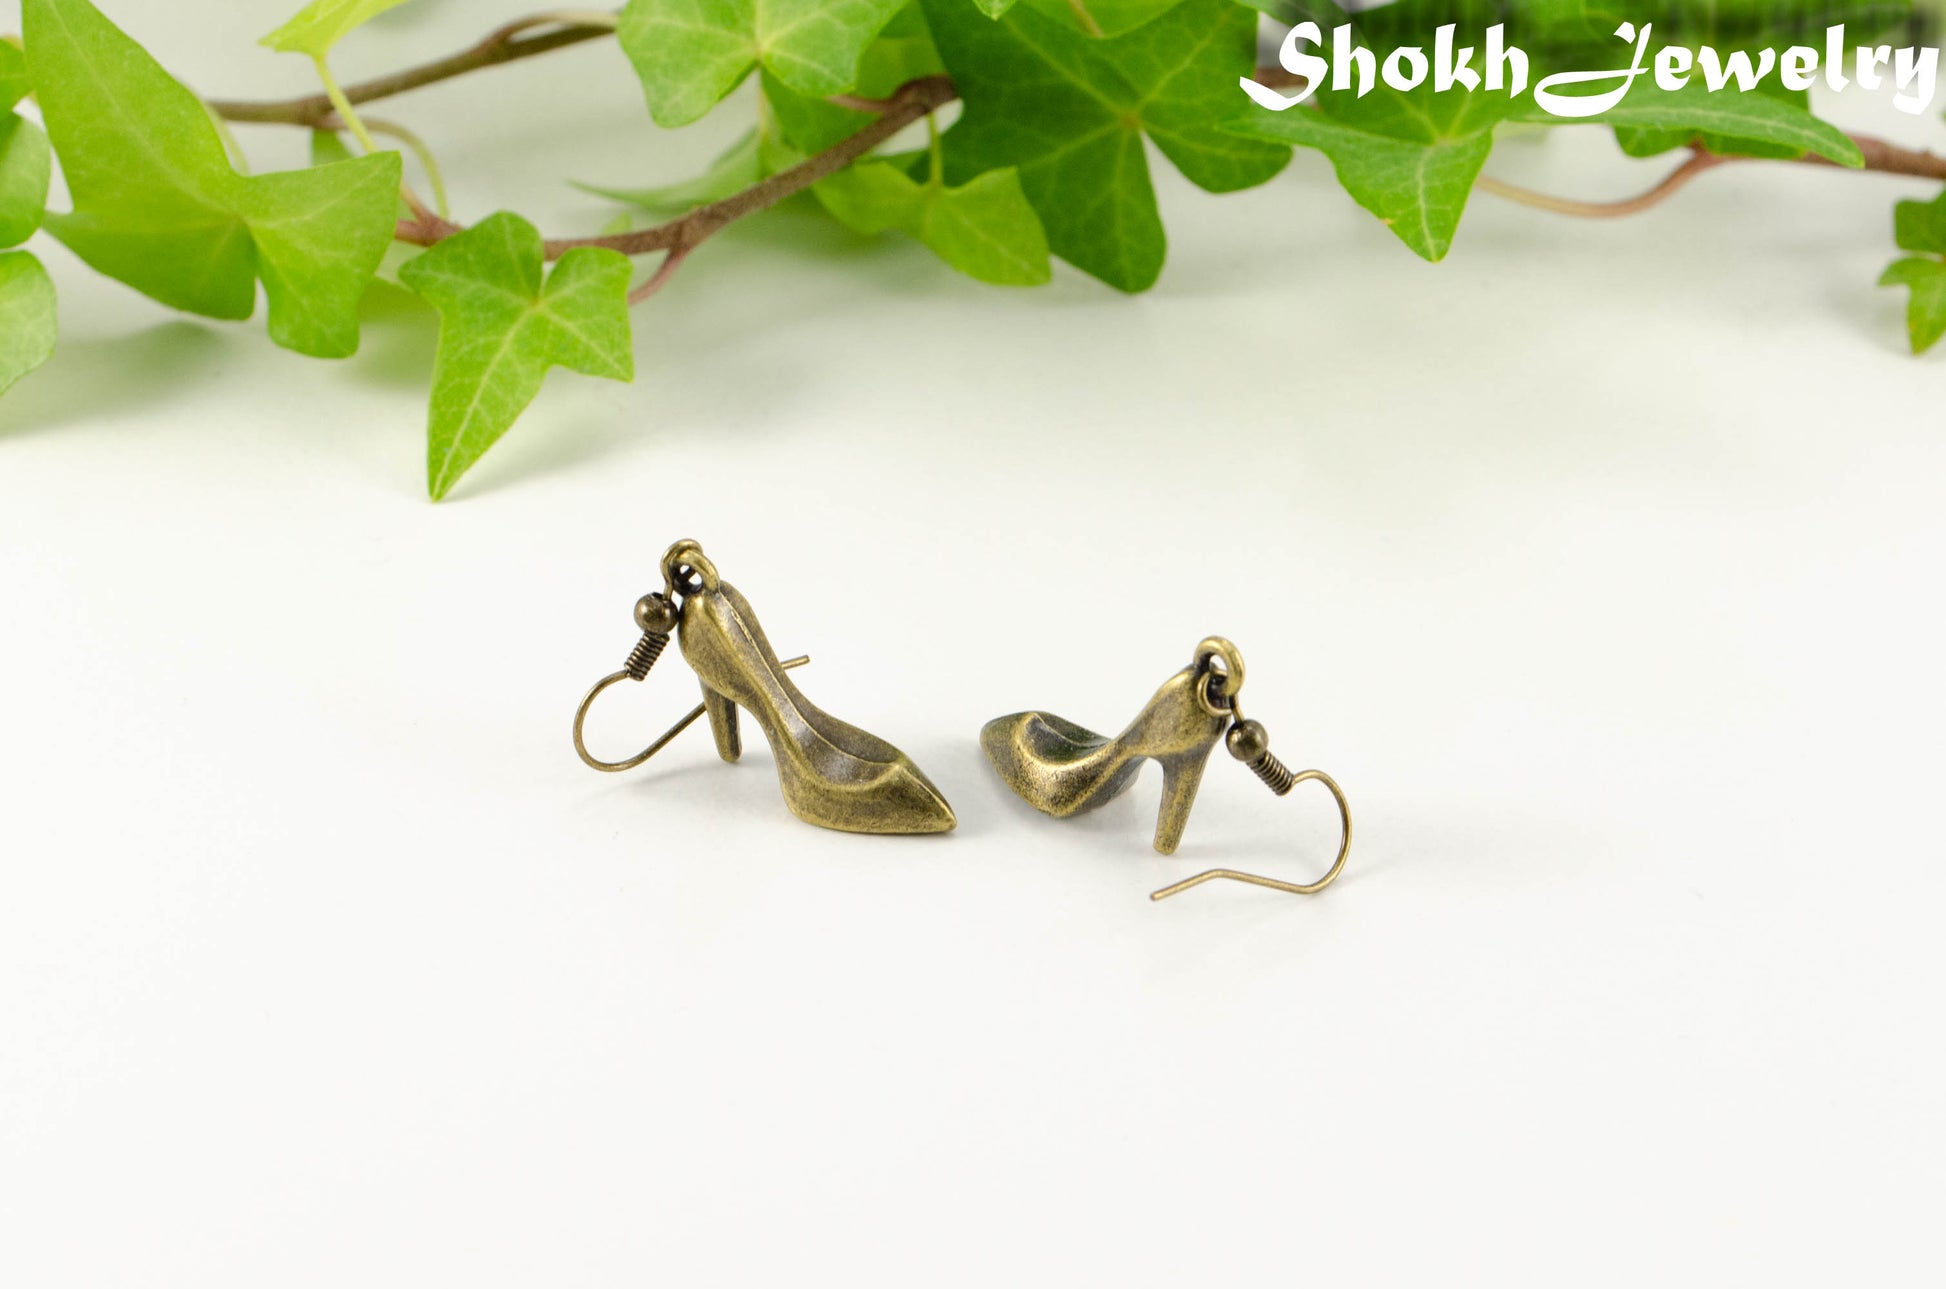 Antique Bronze High Heel Shoe Charm Earrings for women.